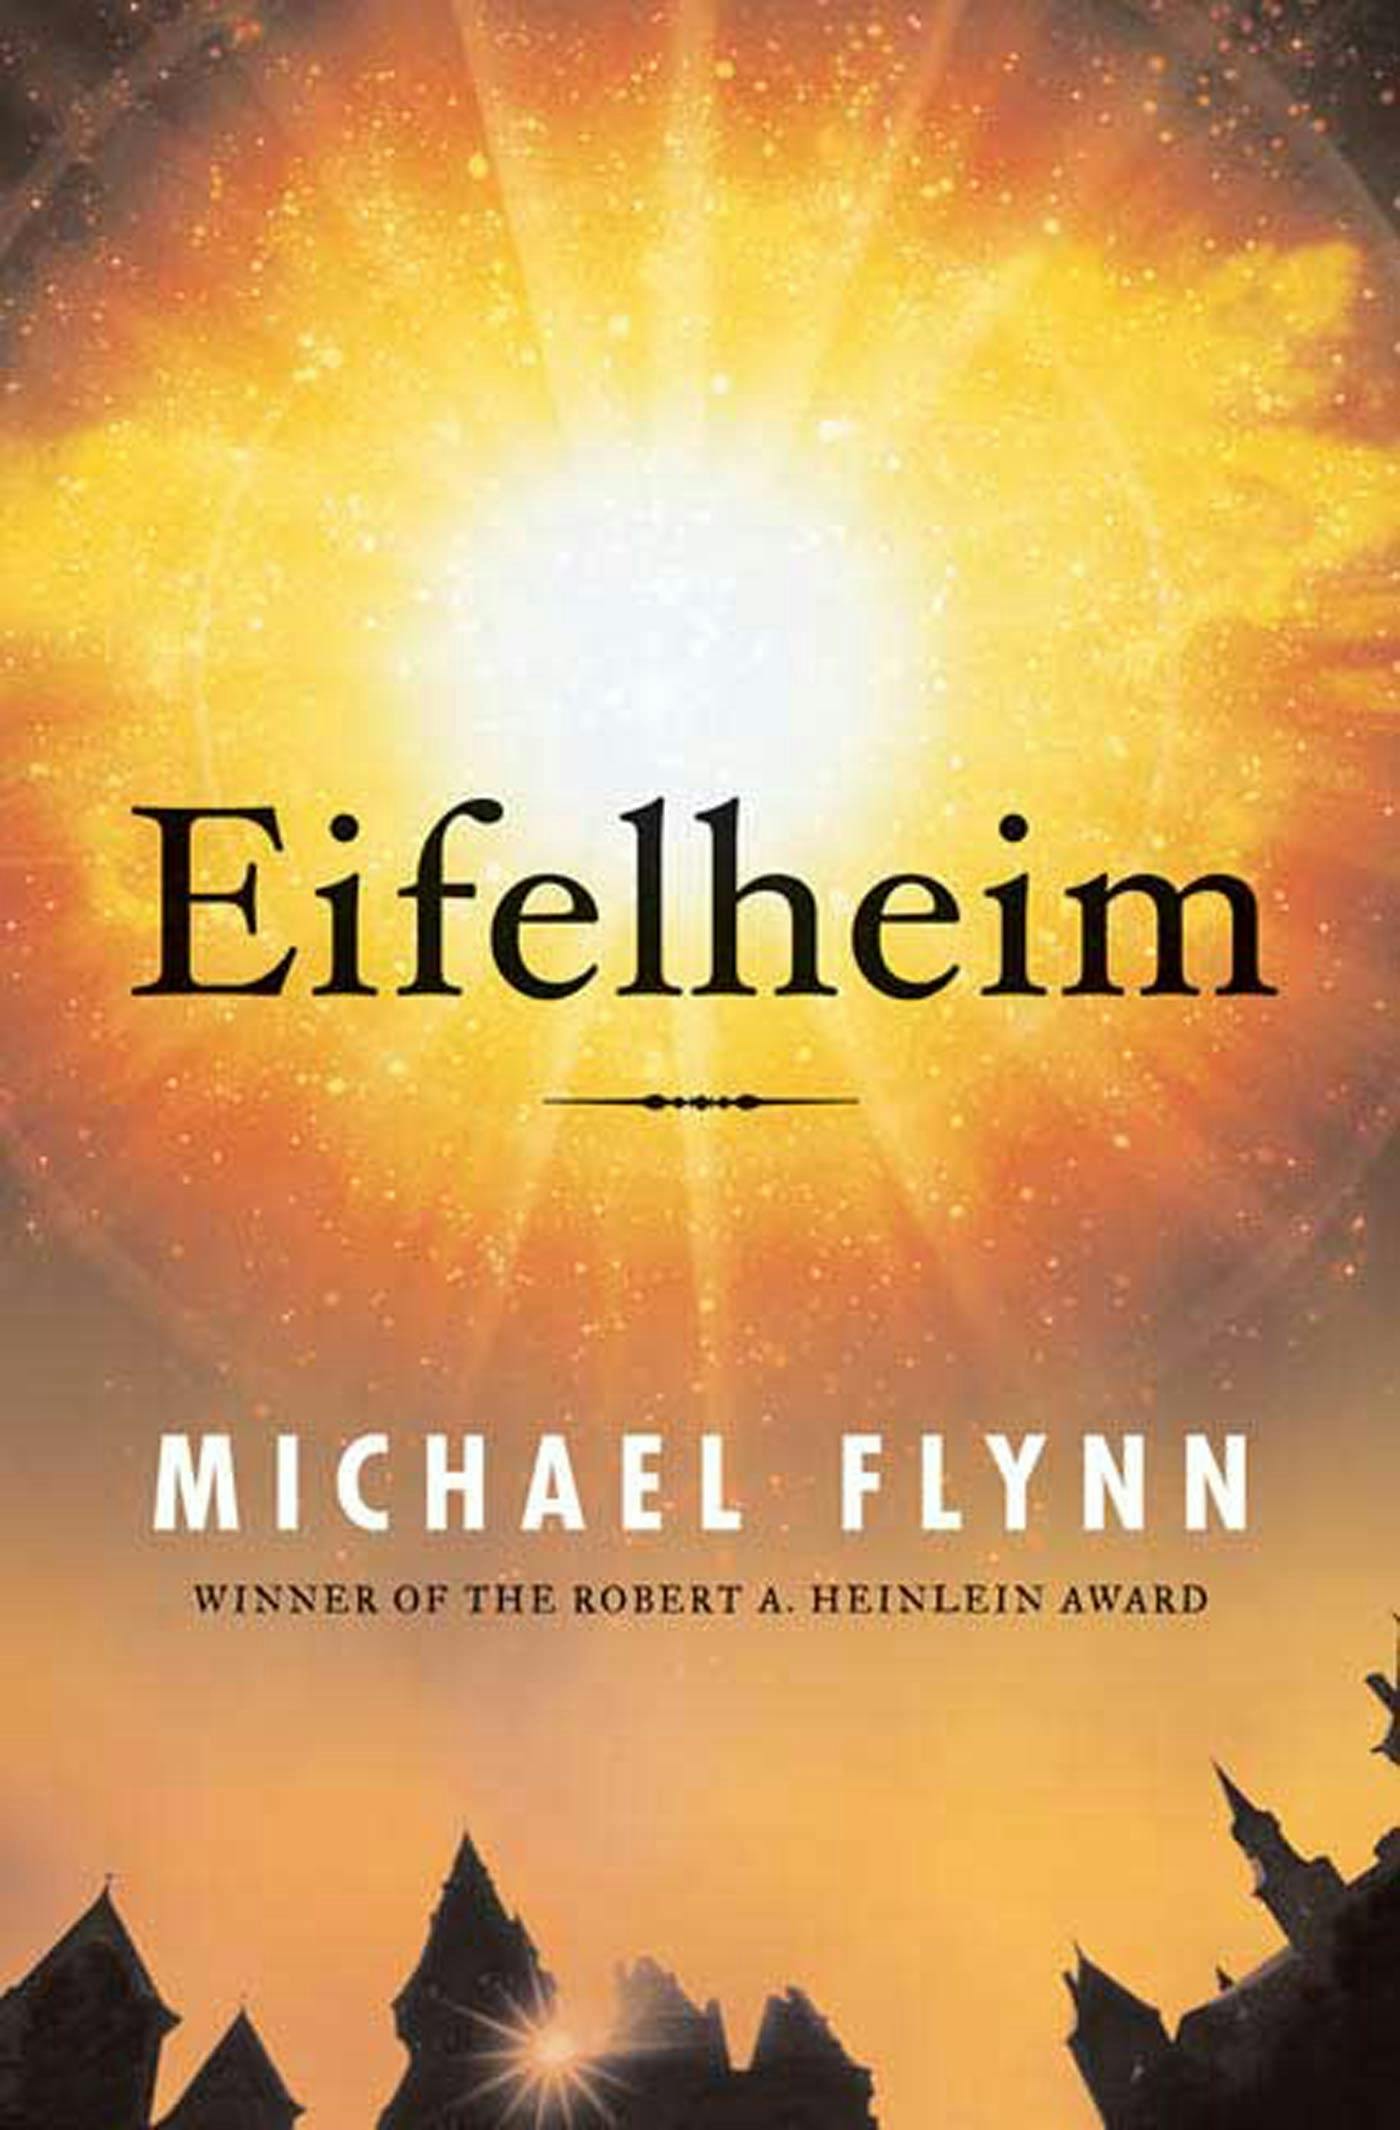 Cover for the book titled as: Eifelheim